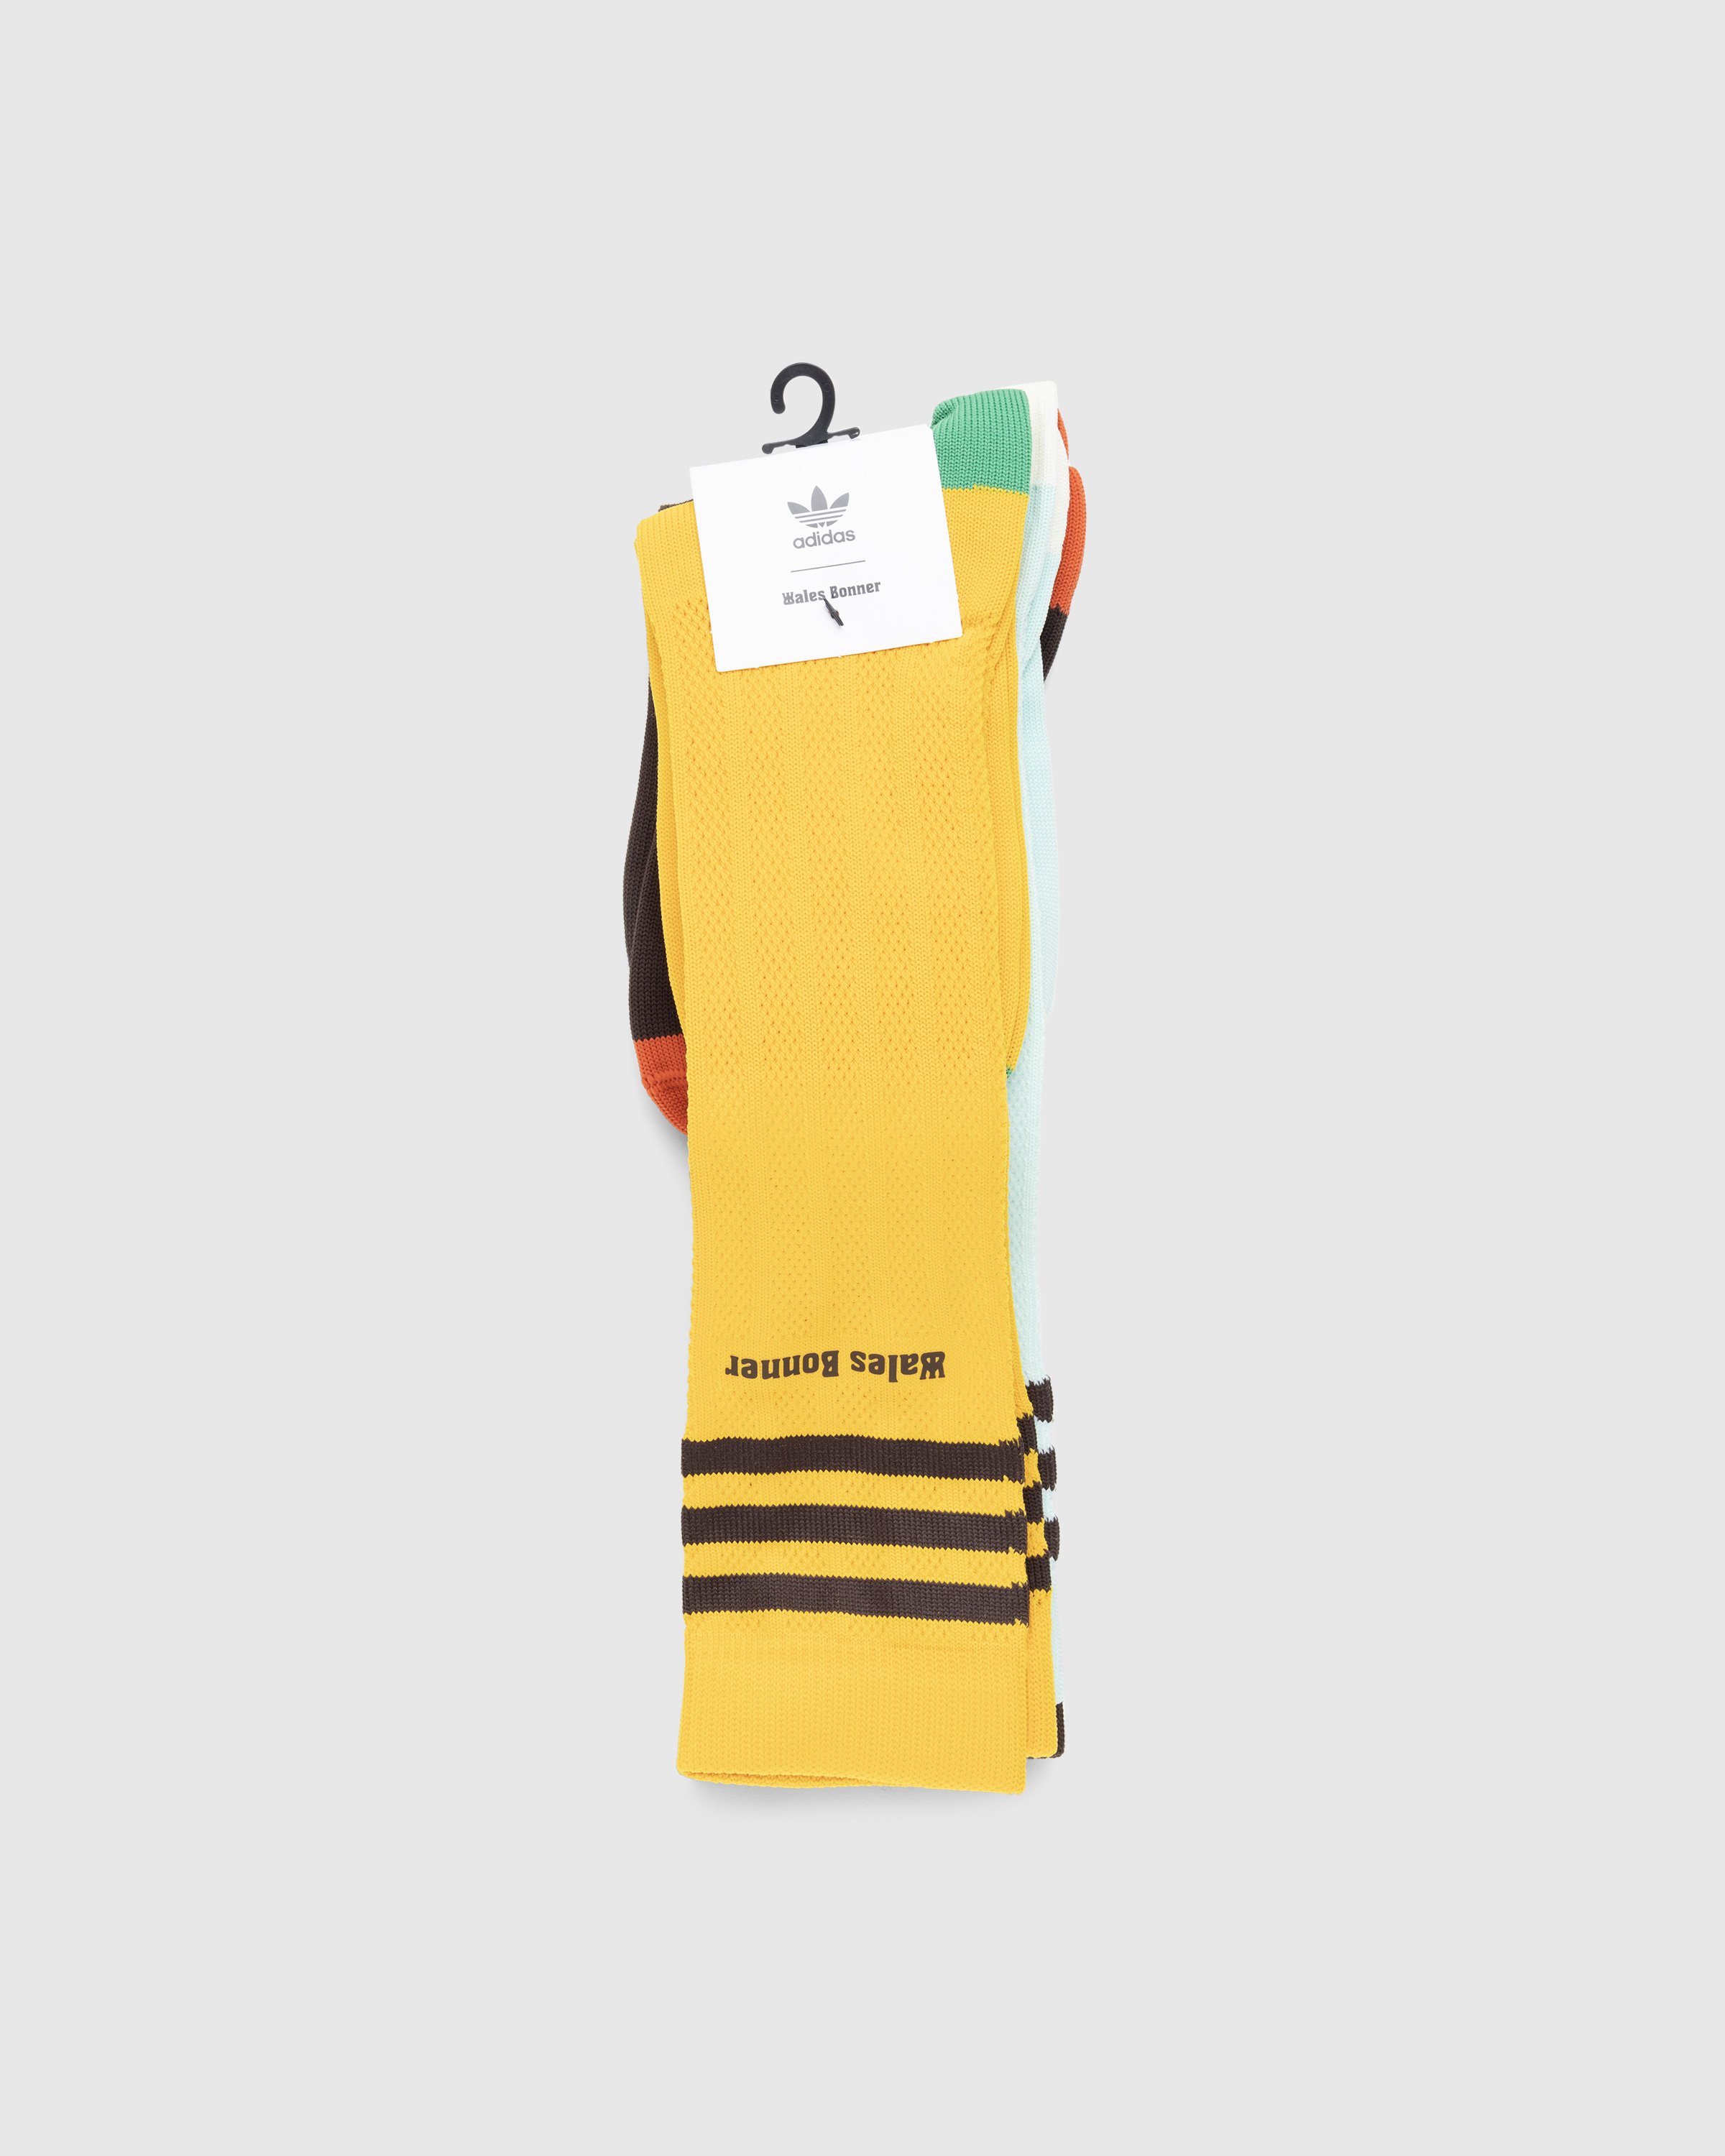 Adidas x Wales Bonner - Crochet Socks Three-Pack Multi - Accessories - Multi - Image 8